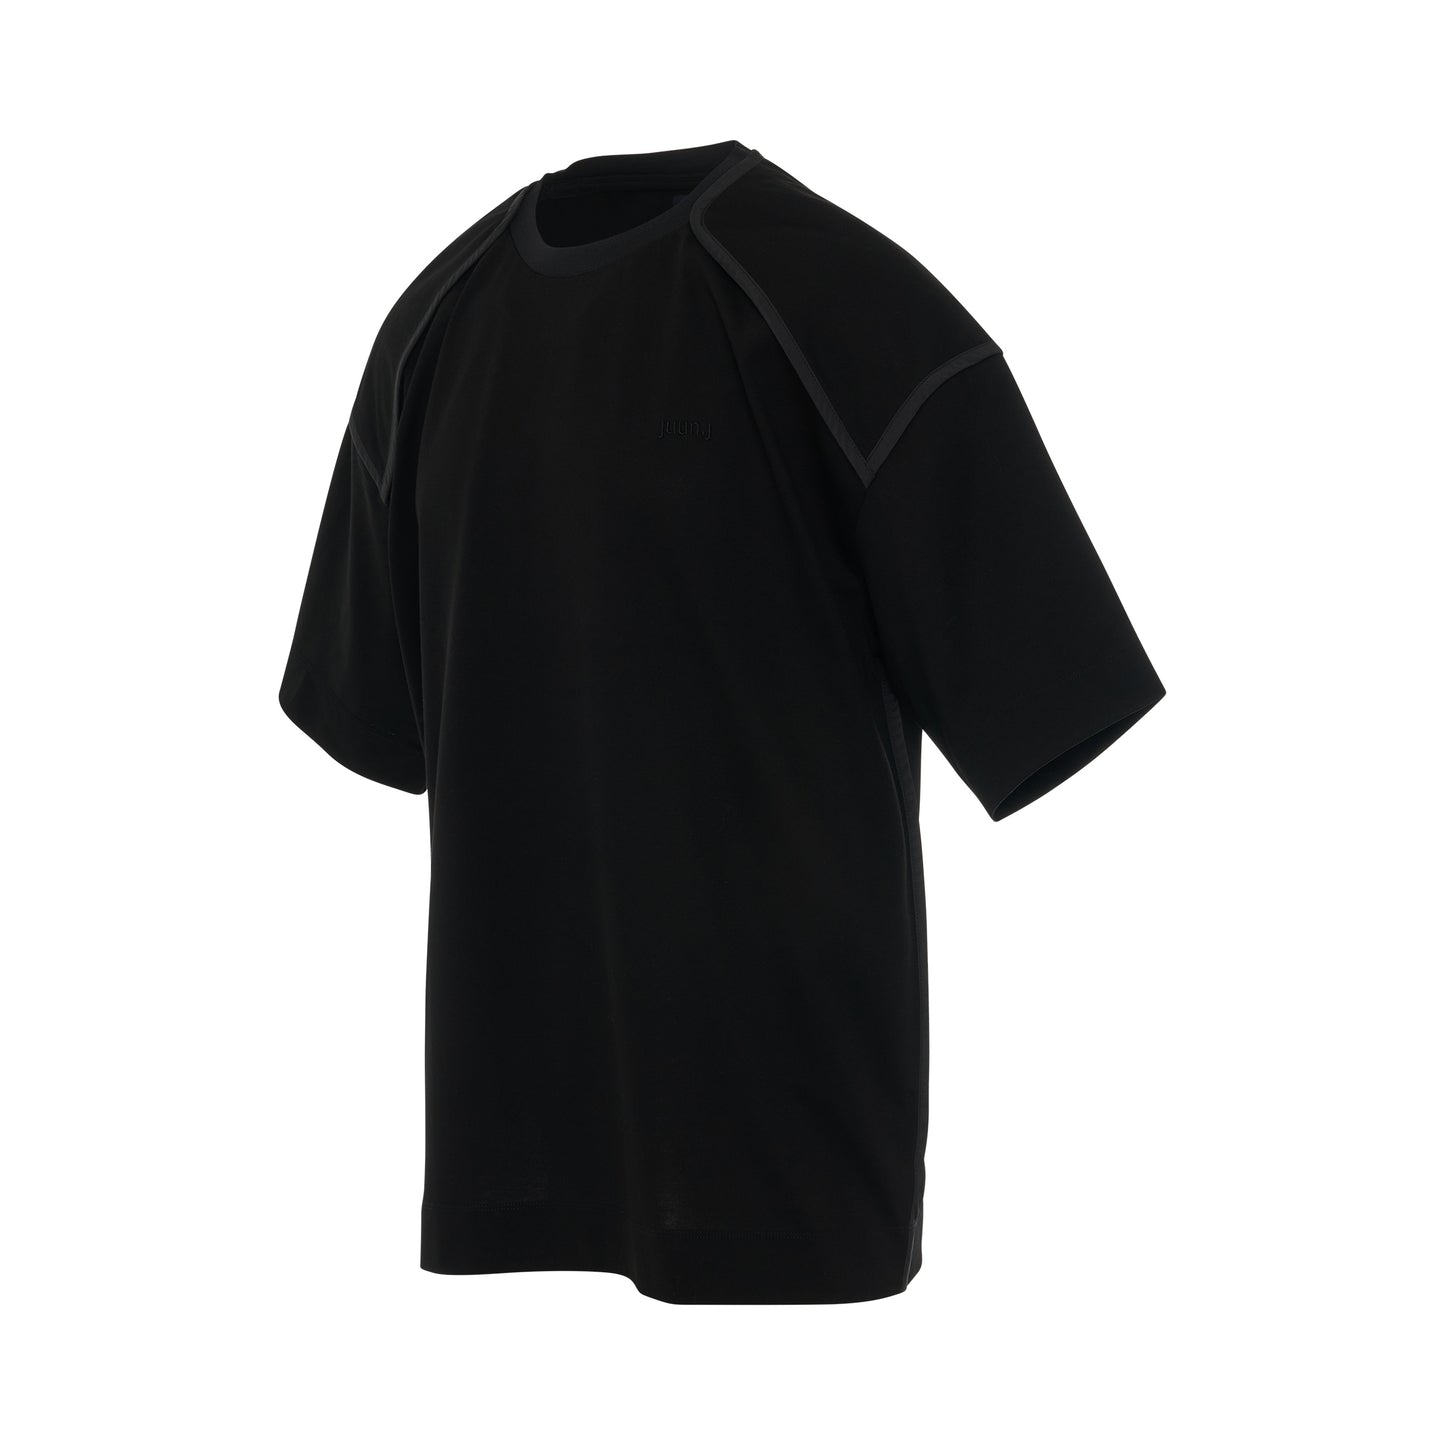 Piping Knit Collar Half Sleeve T-Shirt in Black